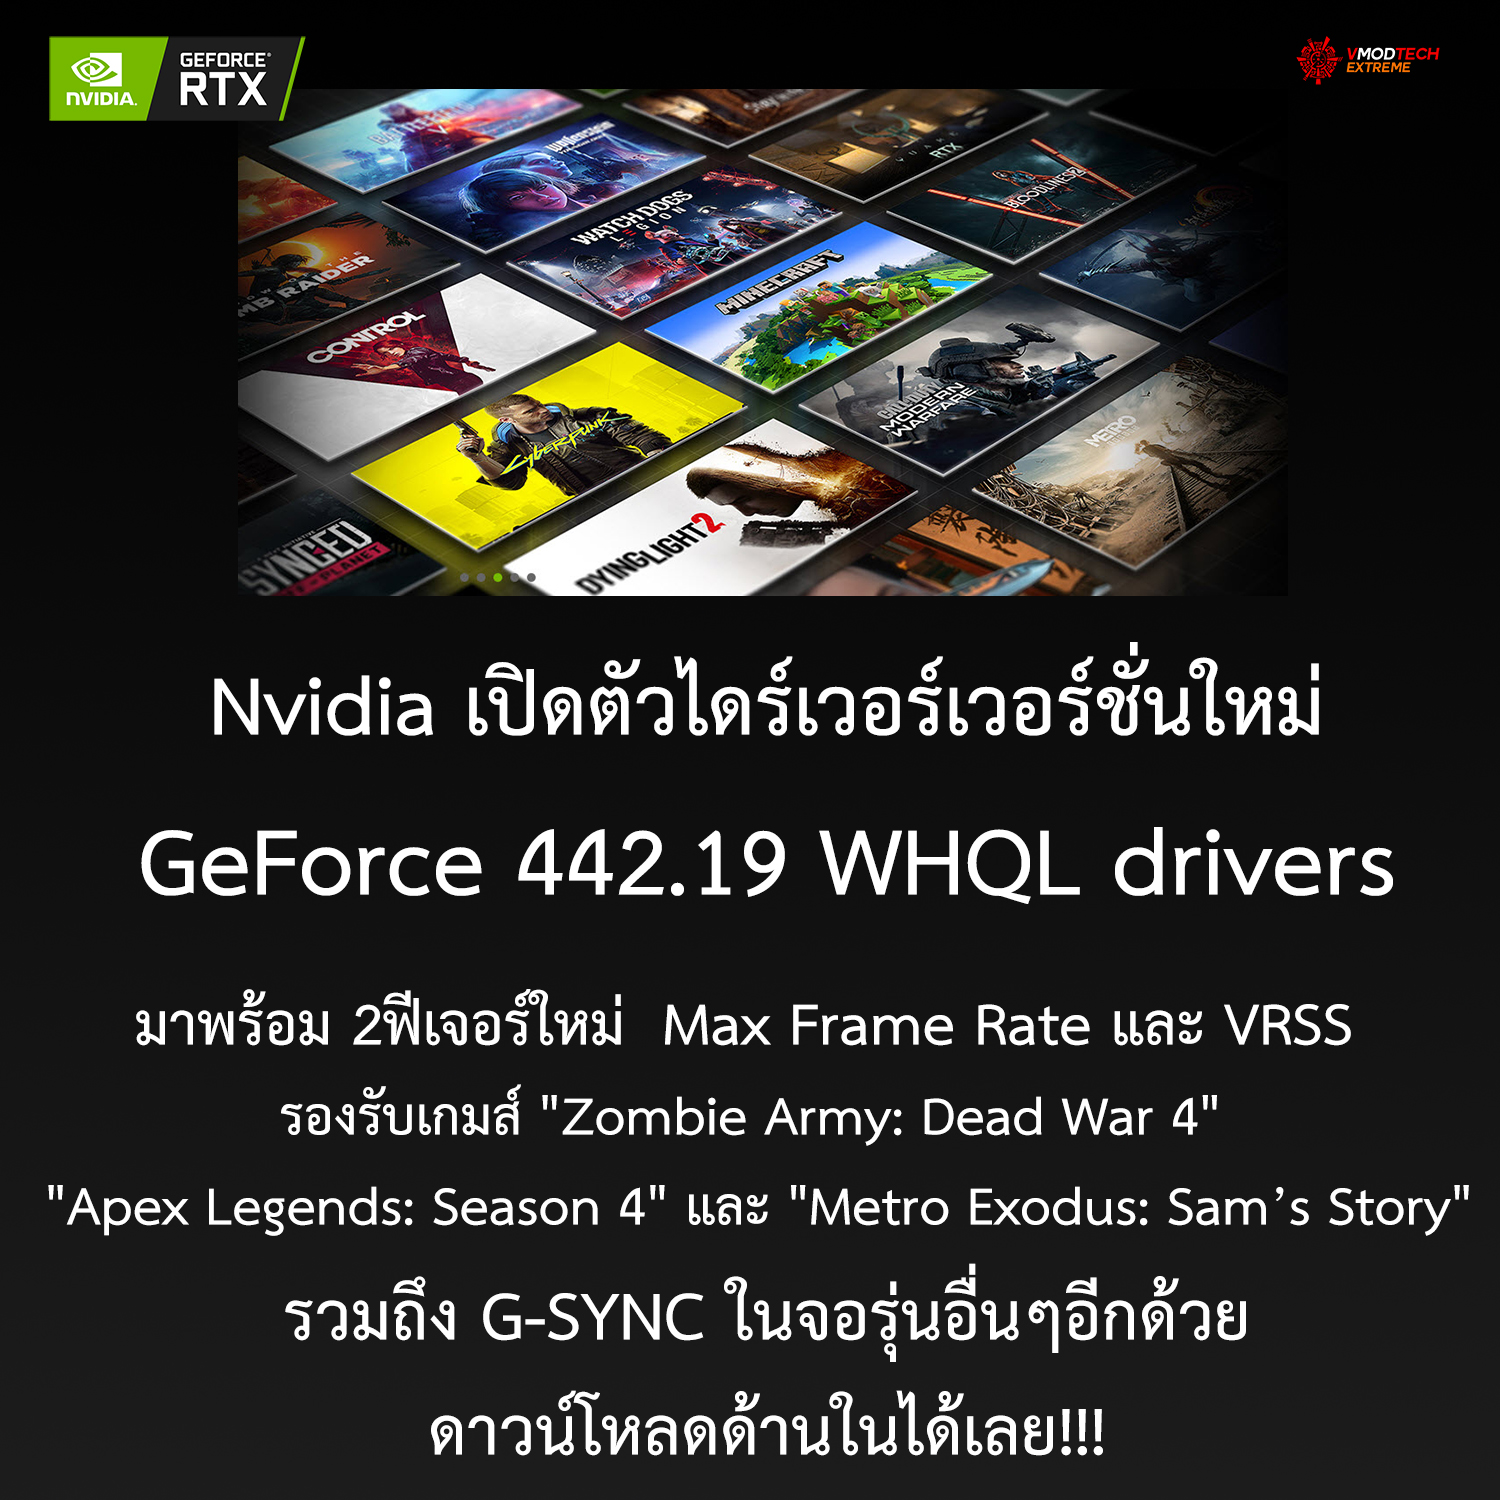 nvidia geforce 442 Nvidia เปิดตัวไดร์เวอร์เวอร์ชั่นใหม่ GeForce 442.19 WHQL drivers รองรับเกมส์ Zombie Army: Dead War 4 Apex Legends: Season 4 และ Metro Exodus: Sam’s Story รวมถึง G SYNC ในจอรุ่นอื่นๆอีกด้วย